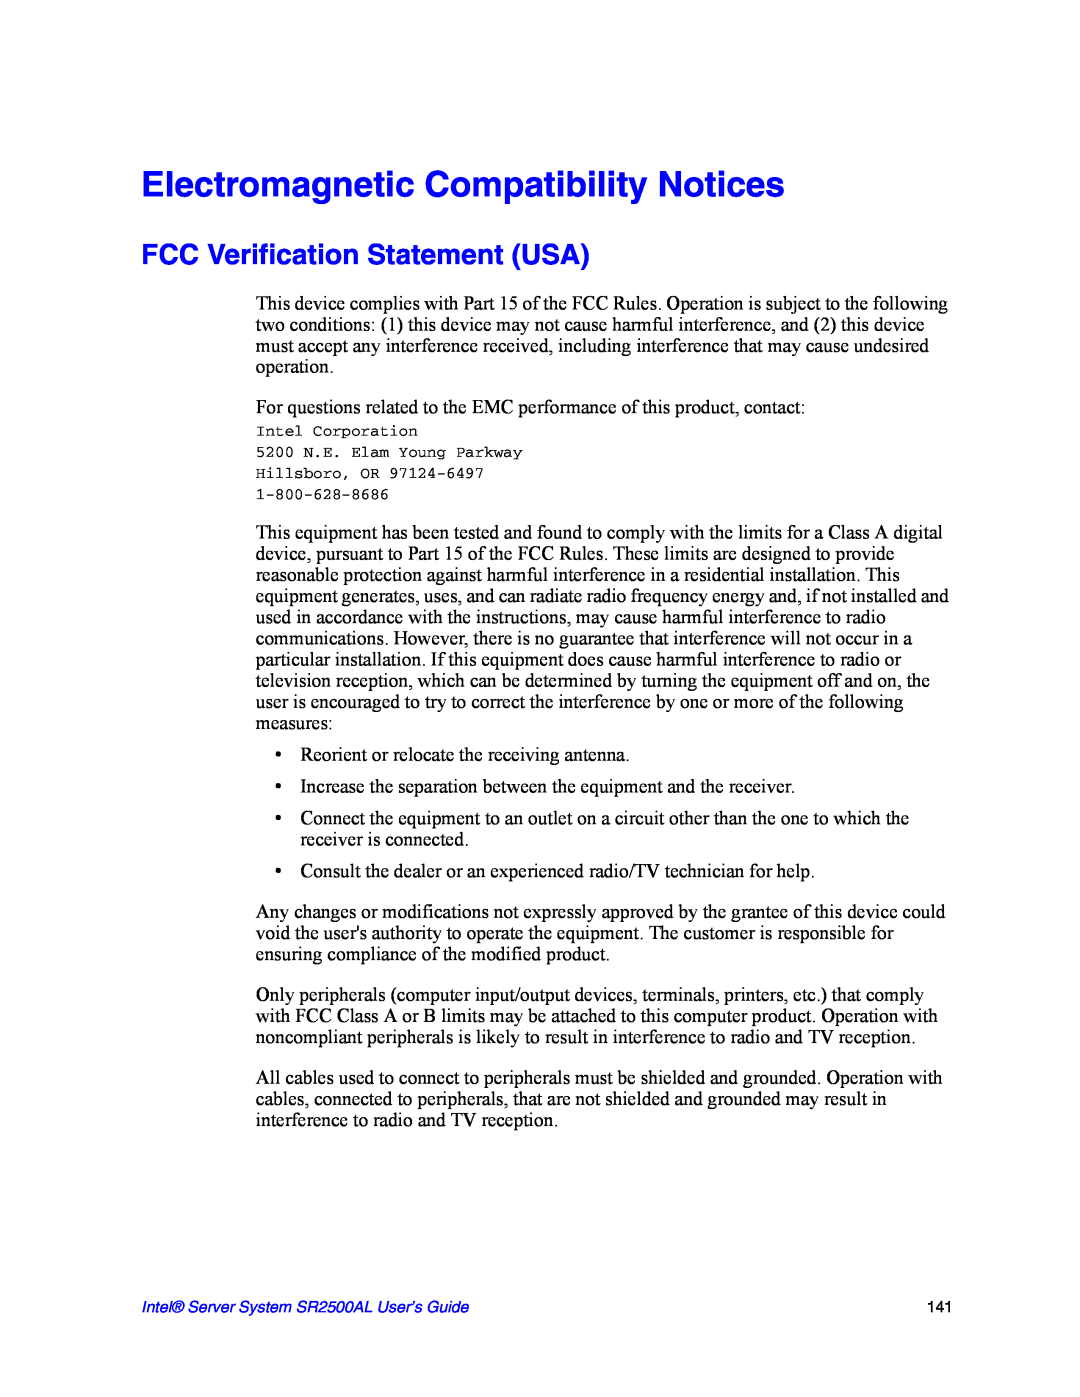 Intel SR2500AL manual Electromagnetic Compatibility Notices, FCC Verification Statement USA 